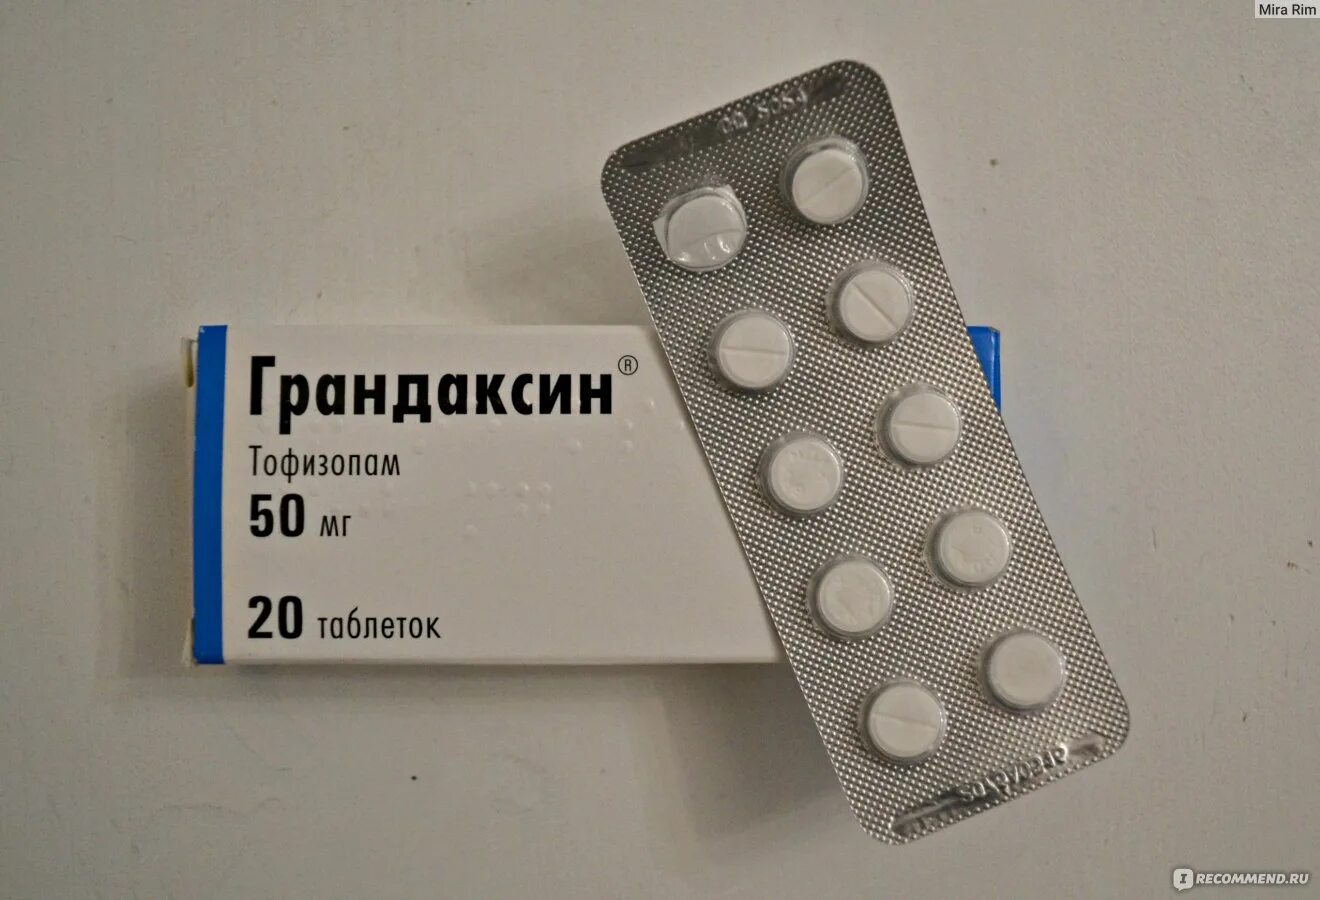 Фармакологическая группа препарата грандаксин. Грандаксин 50 мг. Грандаксин 10 мг. Грандаксин (таб. 50мг n60 Вн ) Egis-Венгрия. Тофизопам грандаксин.